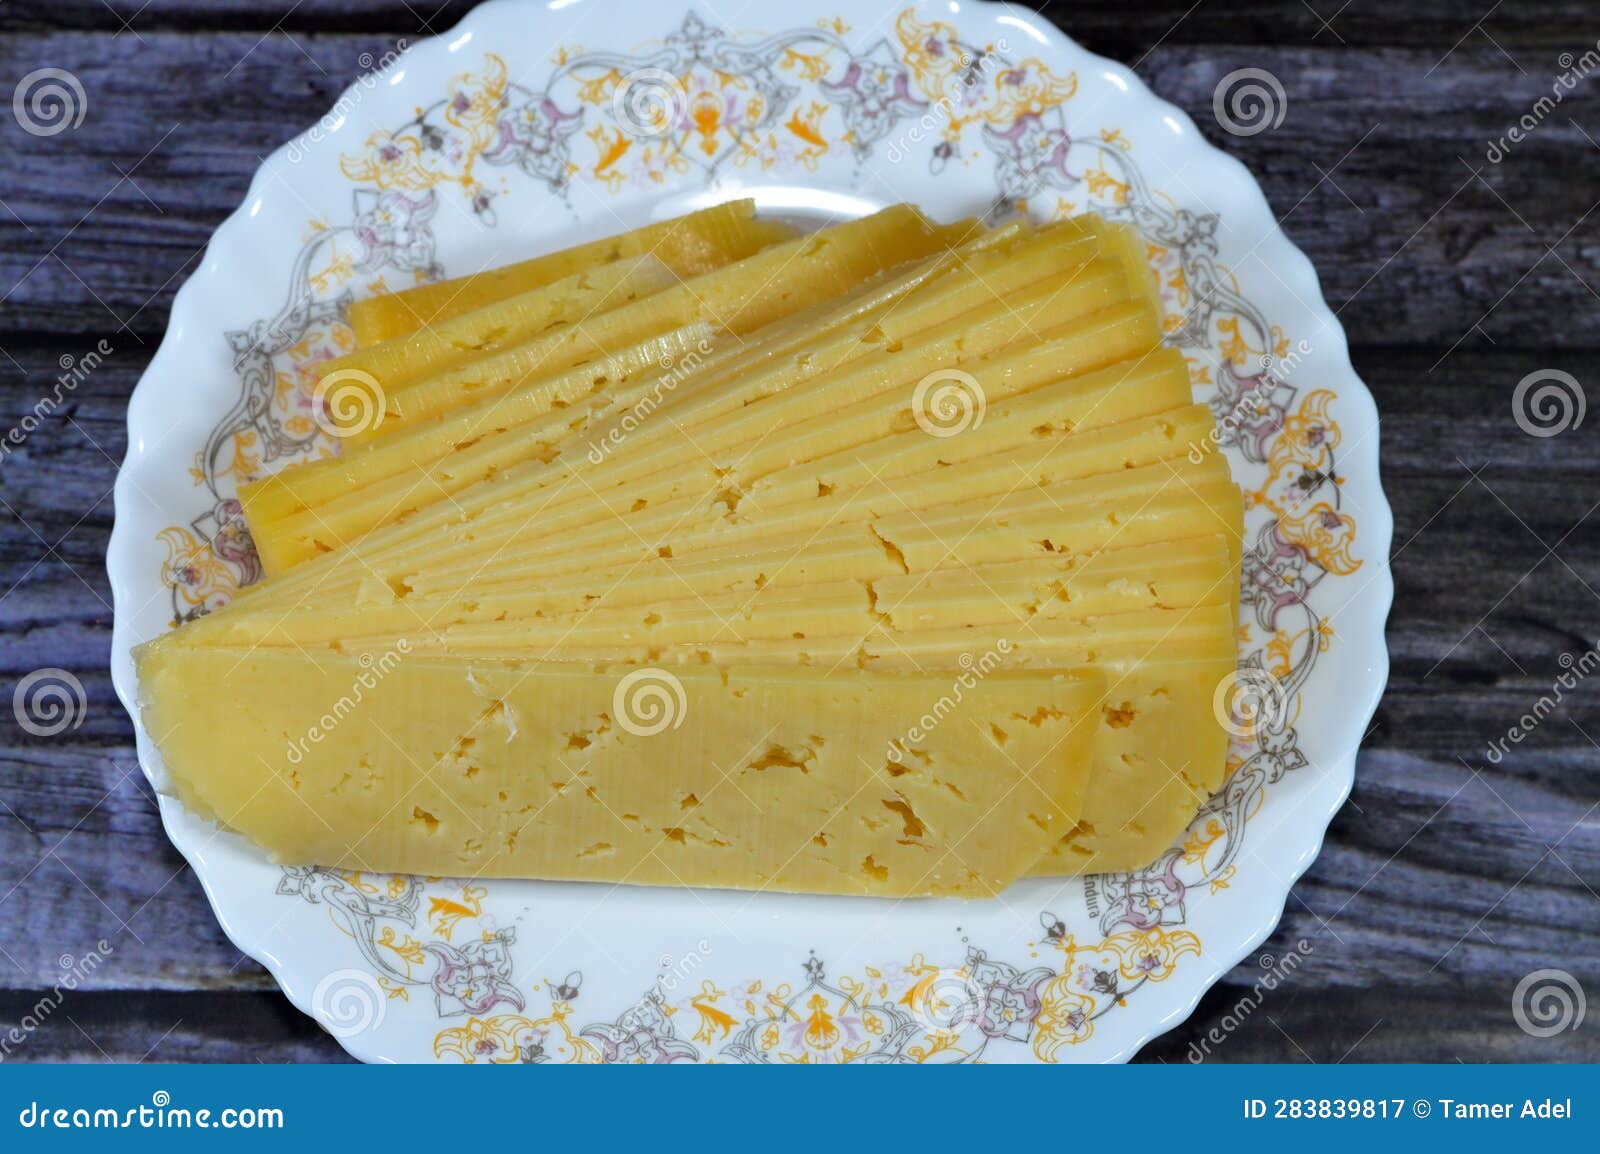 slices of egyptian rumi cheese, also called gebna romiya or gebna turkiya, roumi, romi also romy, middle eastern parmesan hard